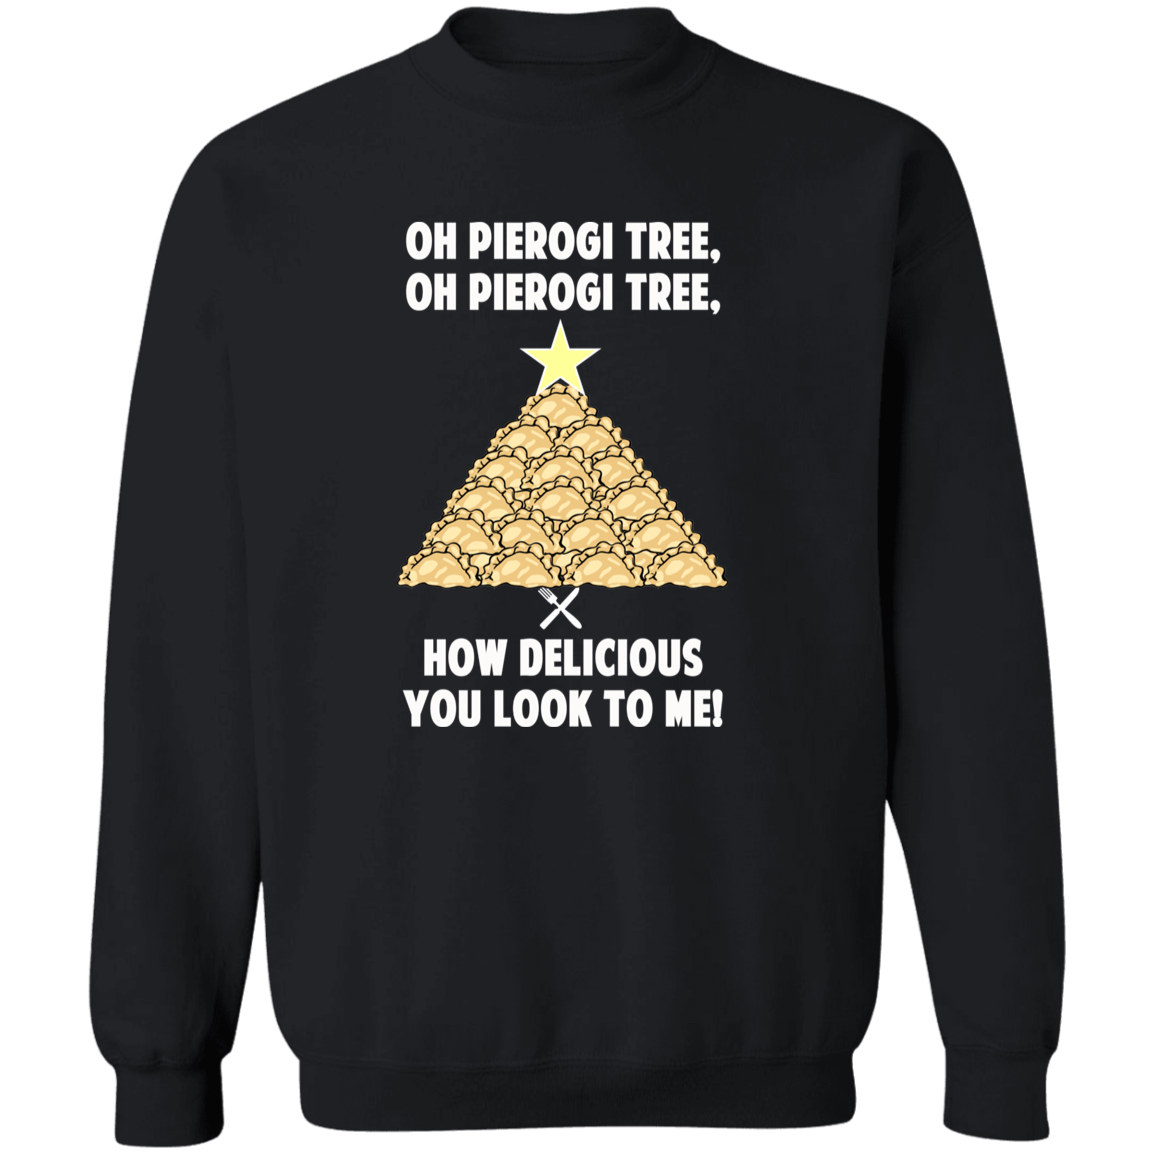 Oh Pierogi Tree Sweatshirt - The Original Sweatshirts CustomCat Black S 